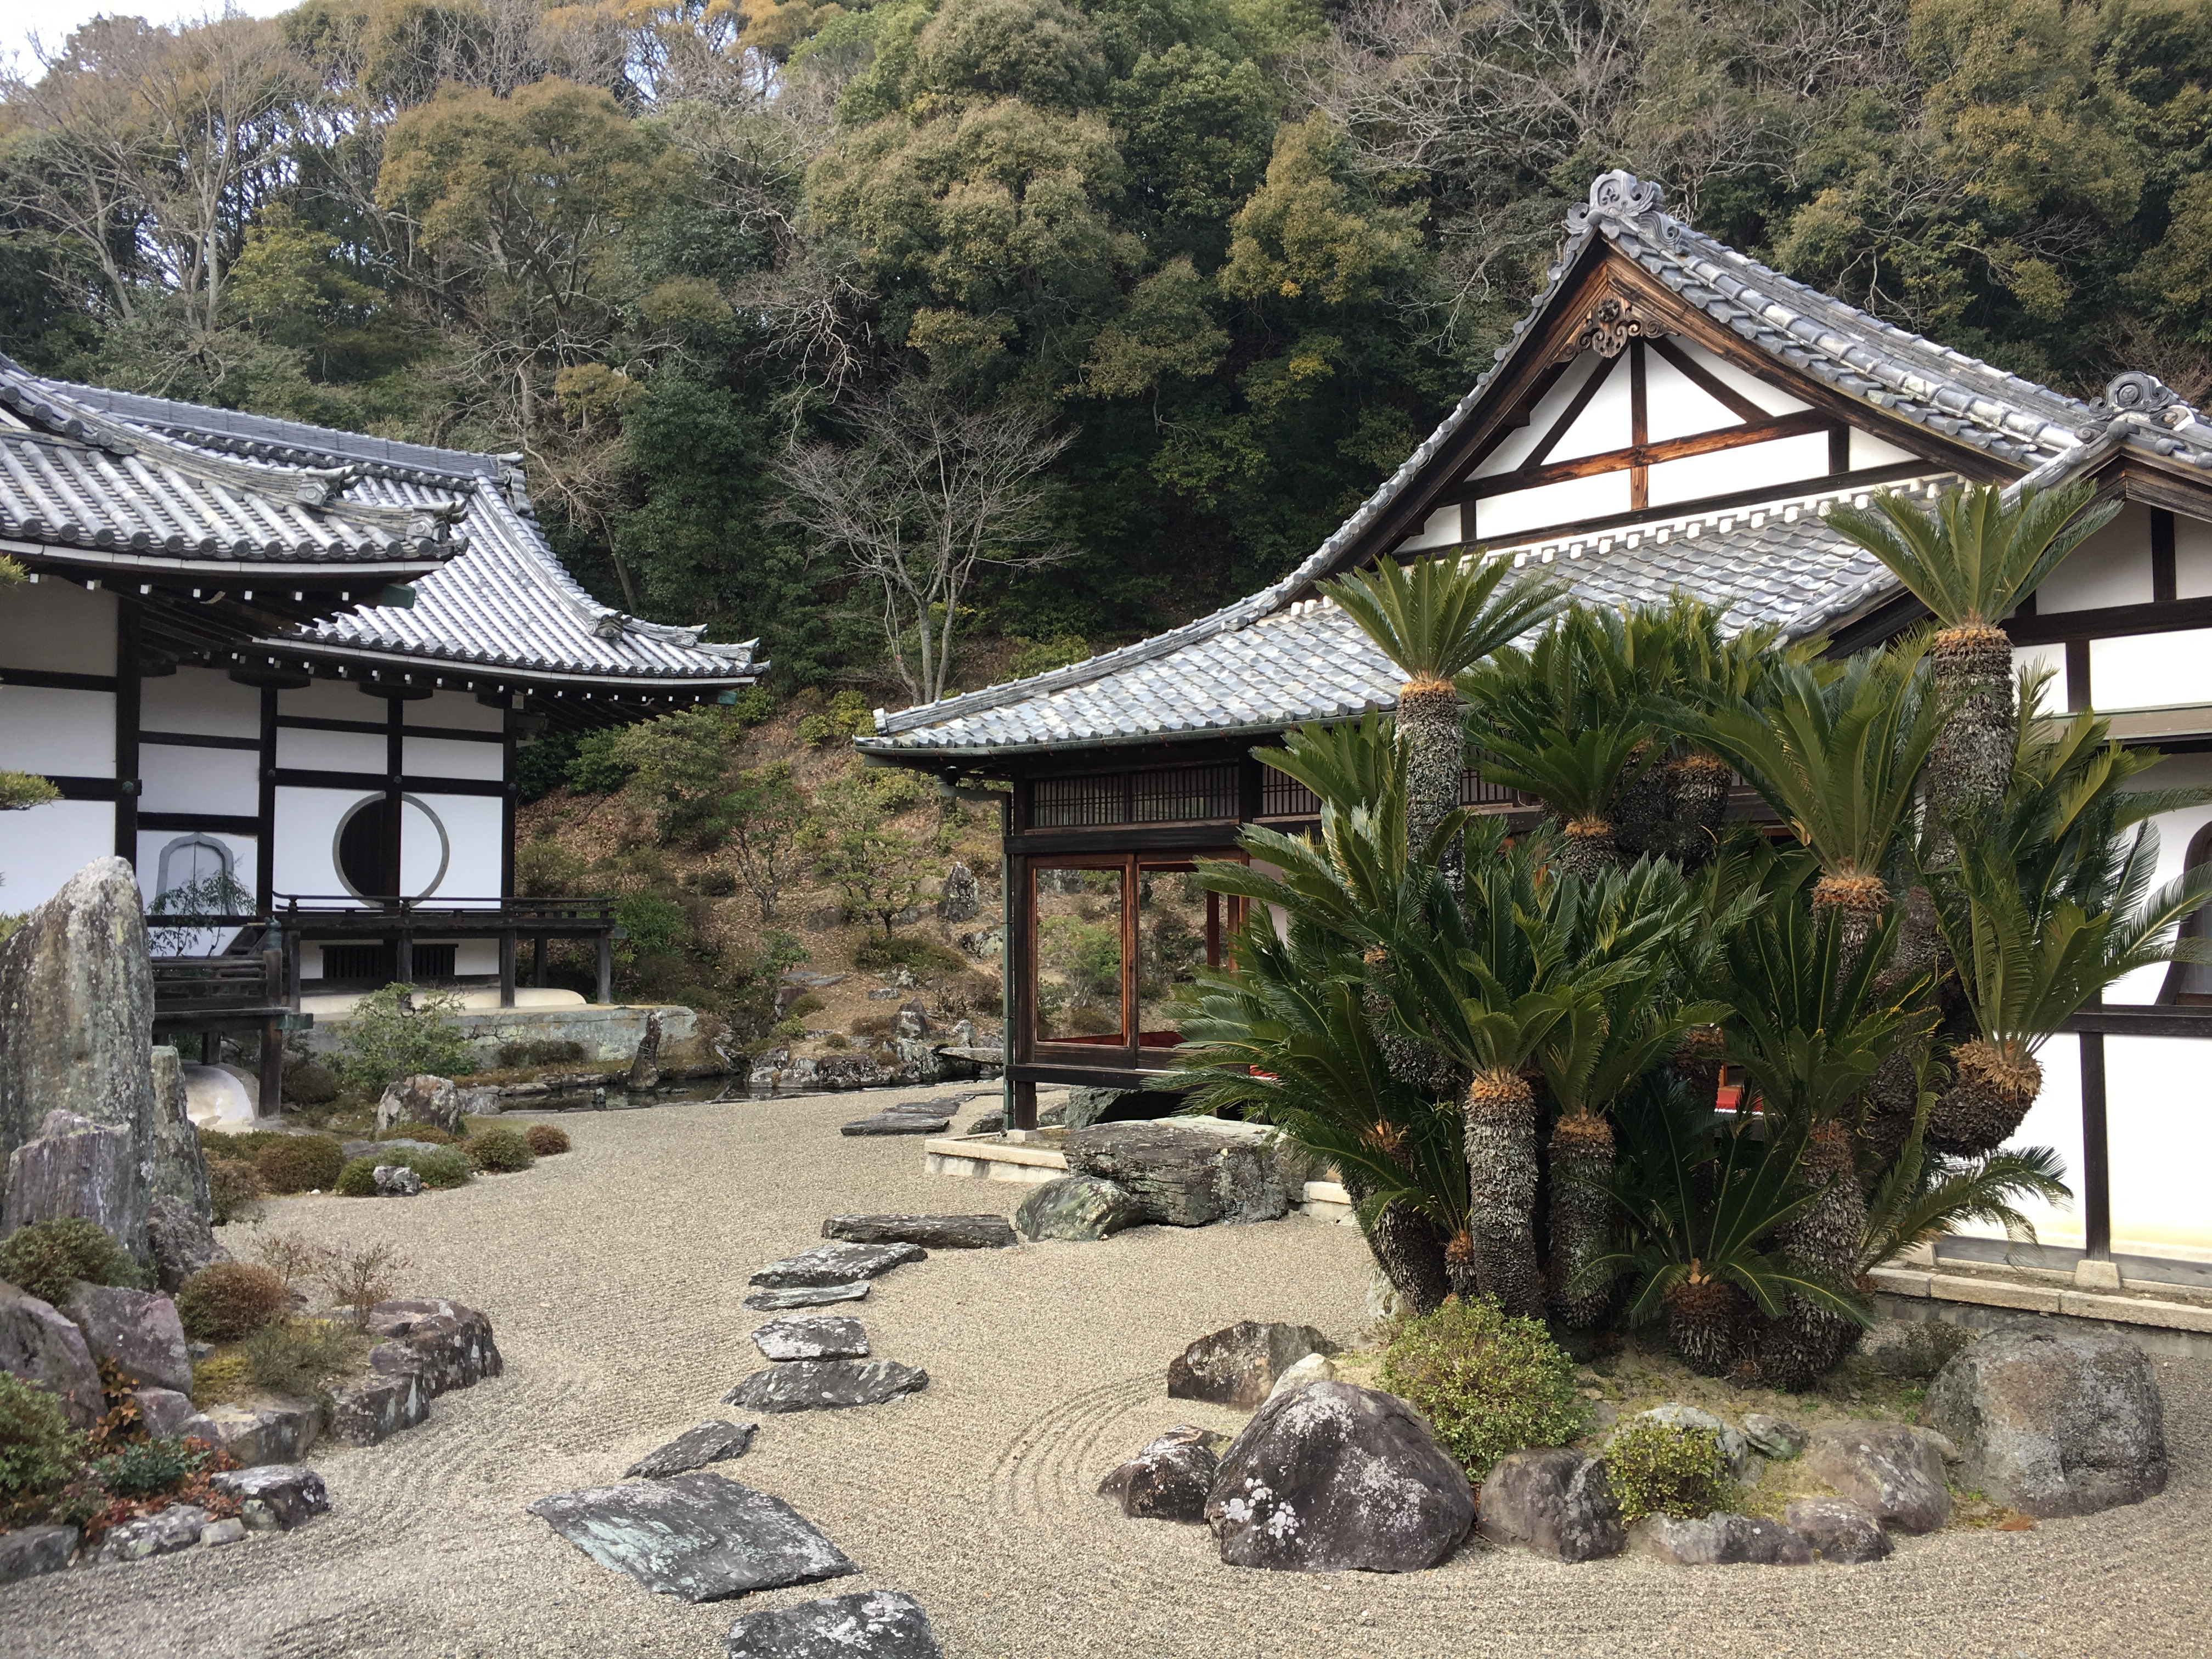 Honbos rock garden of Negoro-ji Temple and